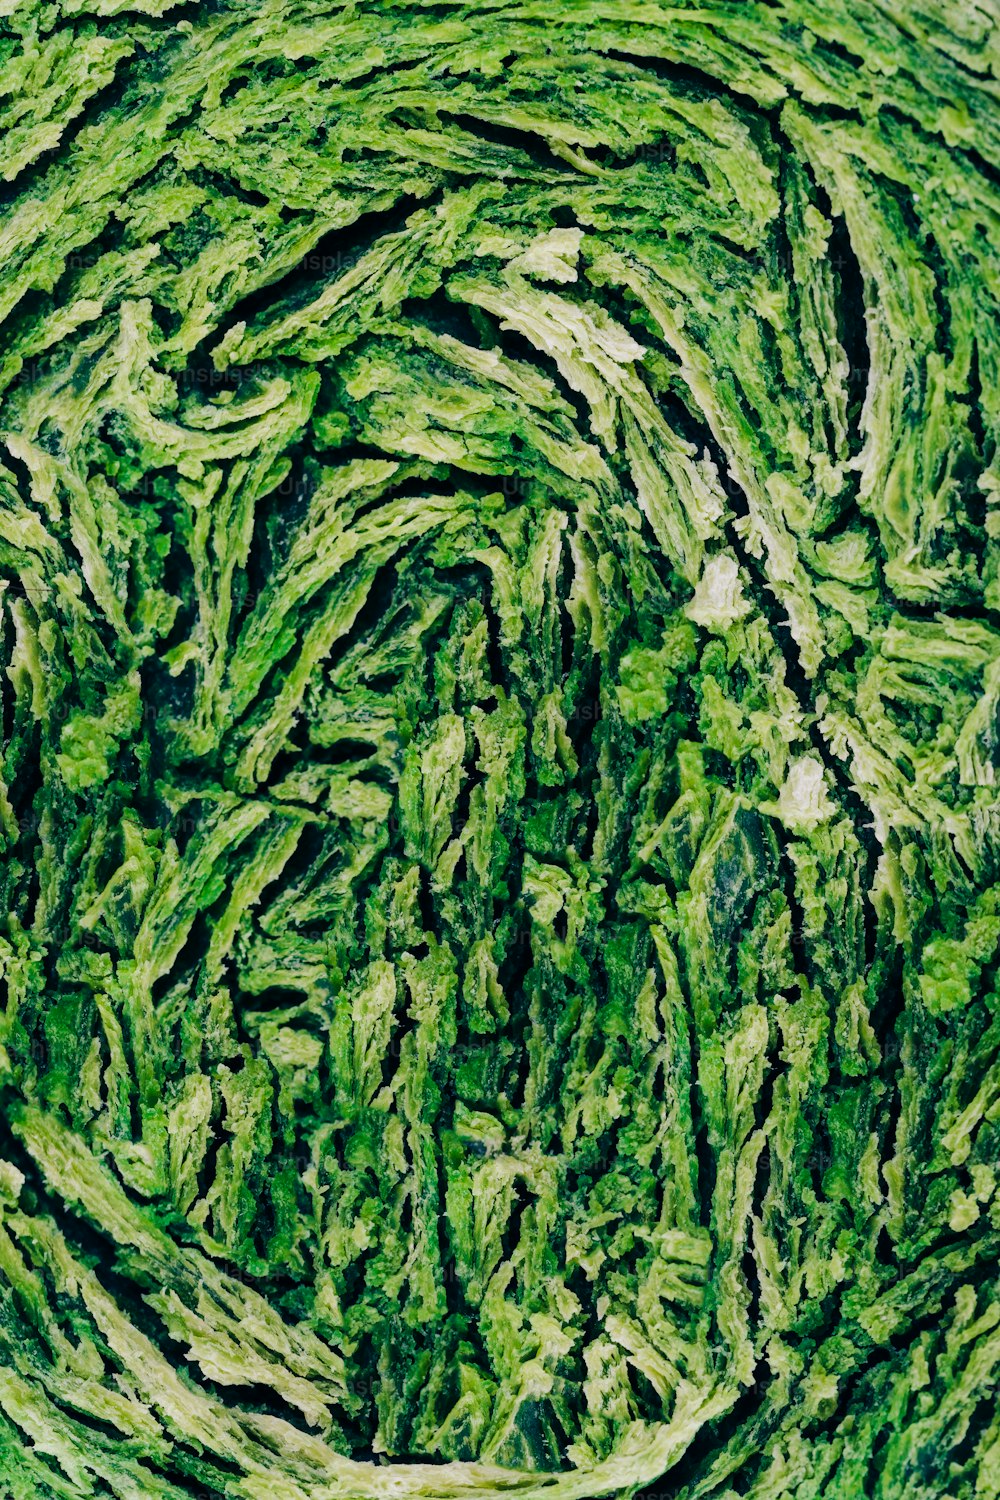 a circular pattern made of green algae